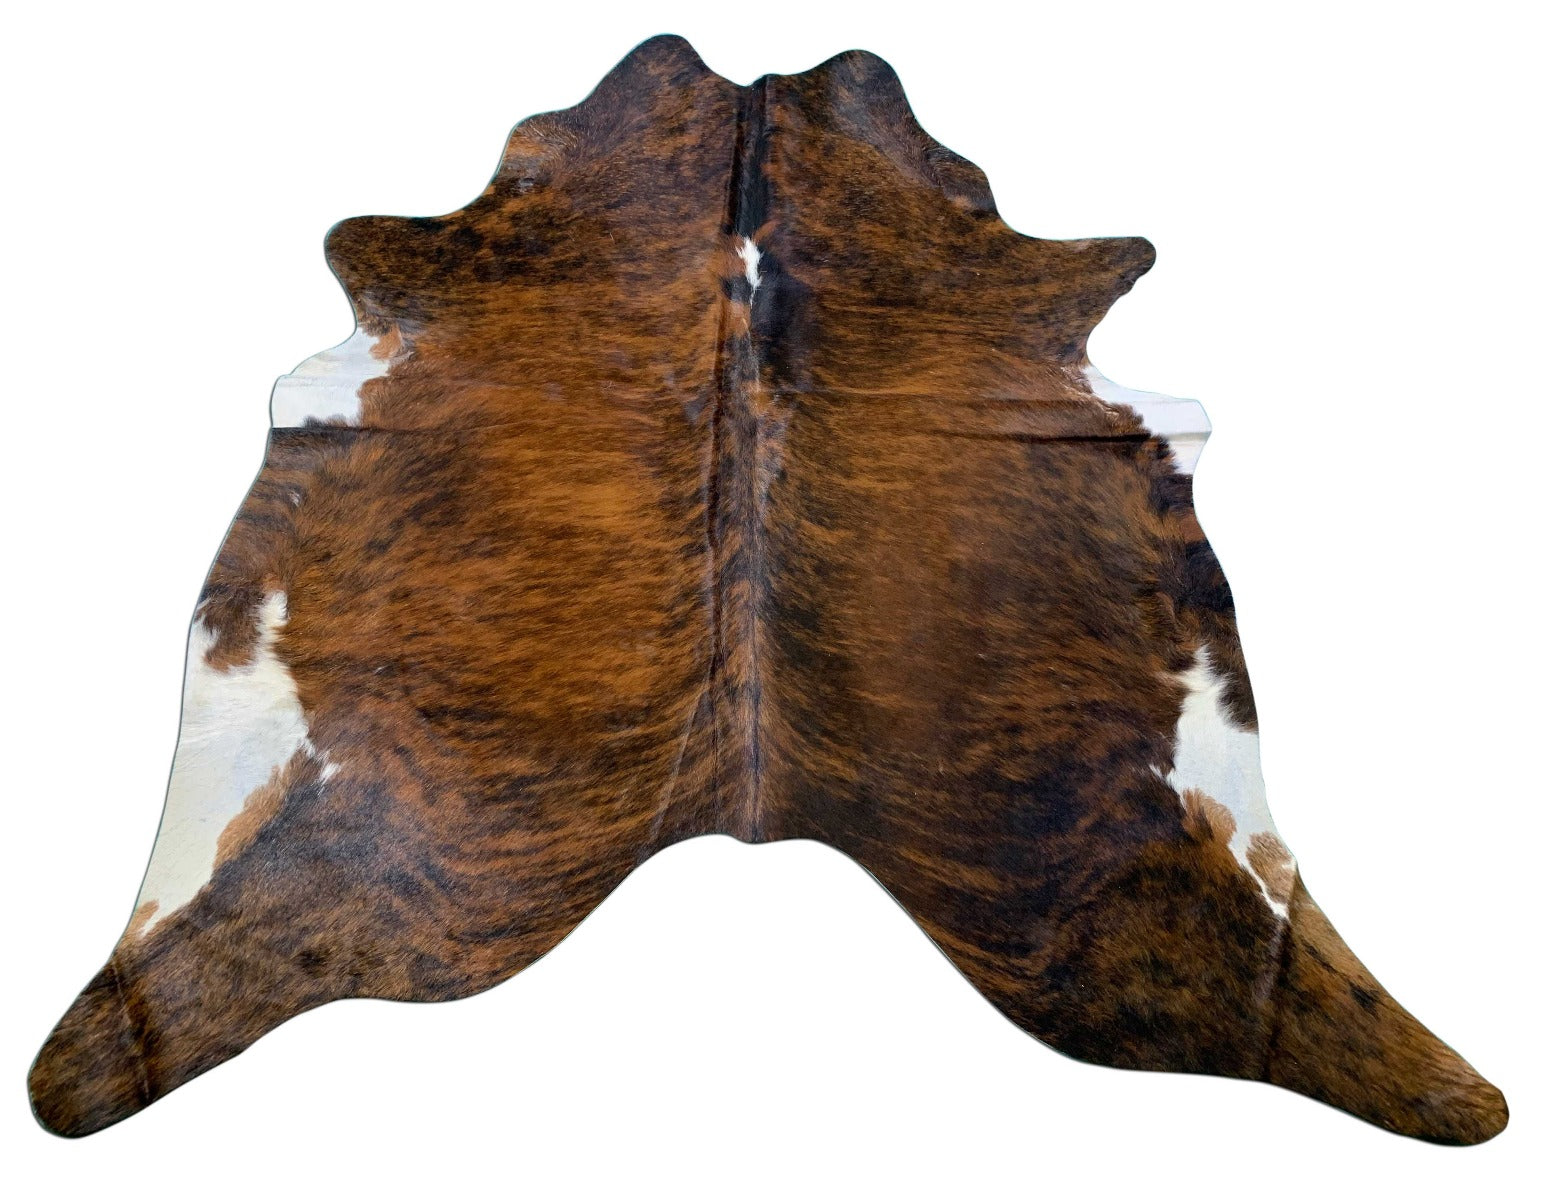 Dark Brown Brindle Cowhide Rug with White Belly - Size: 7x6 3/4 feet C-1494